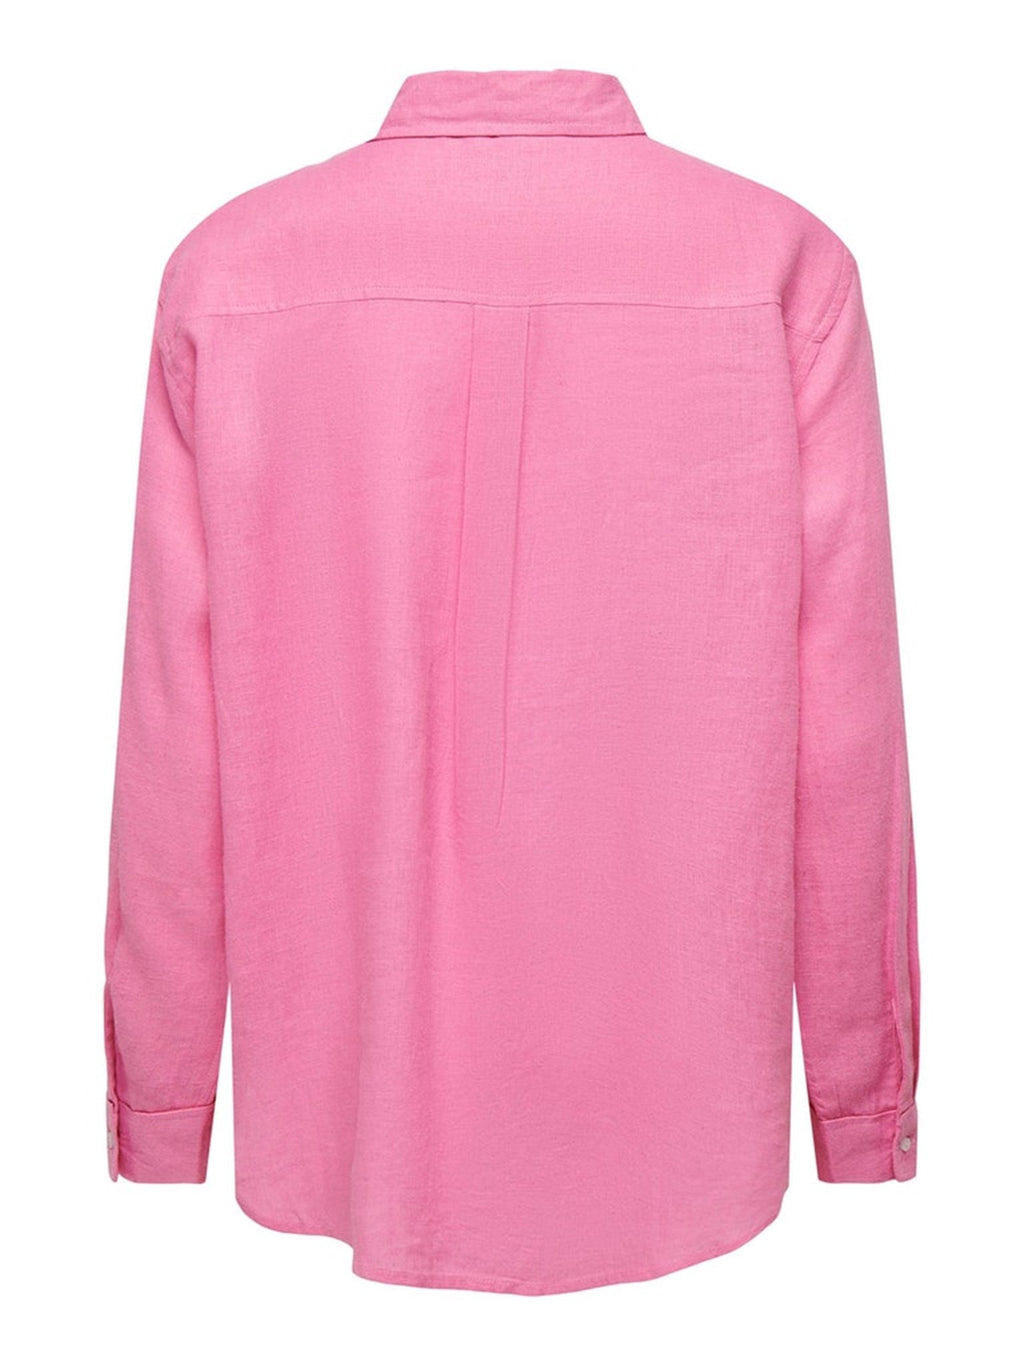 Tokyo Leinenhemd - Sachet Pink